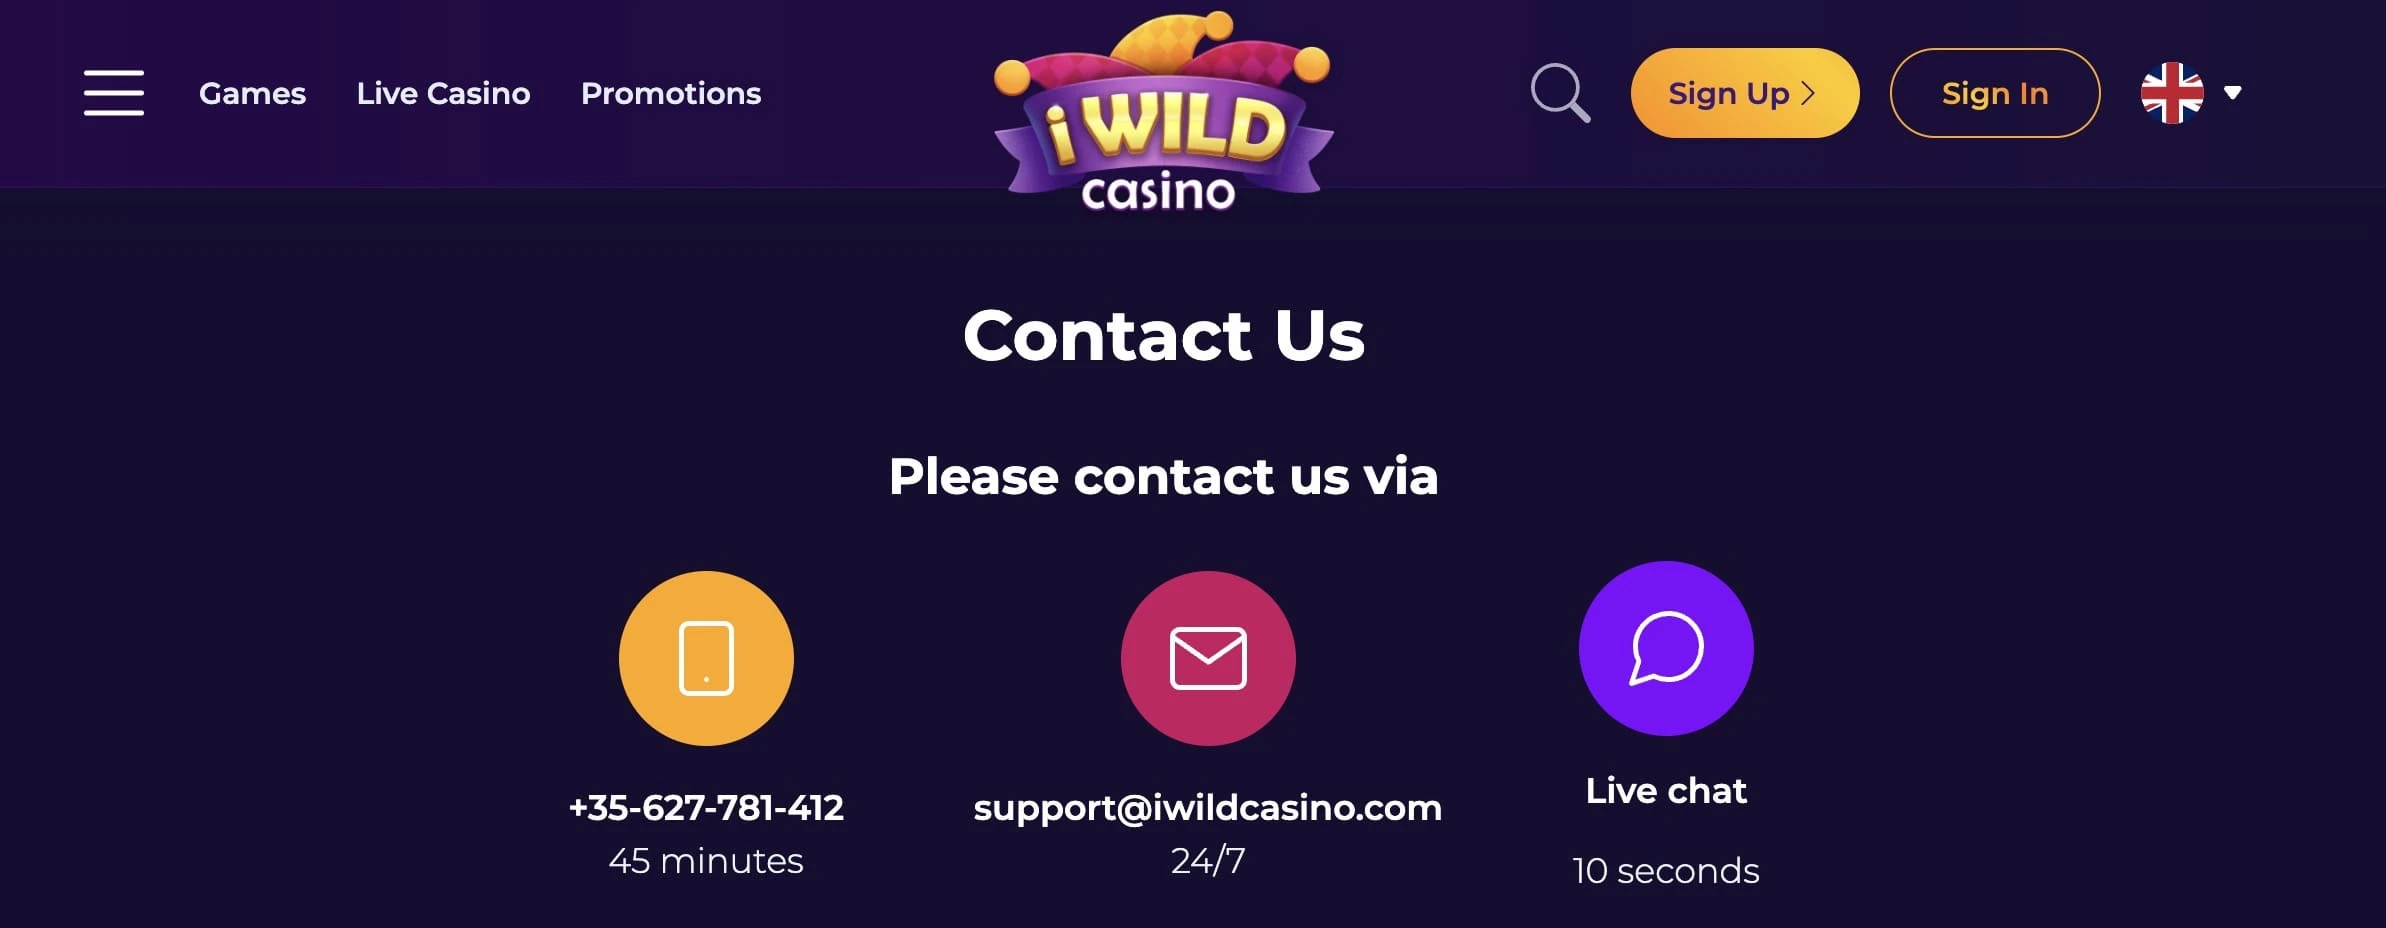 iWild casino customer support